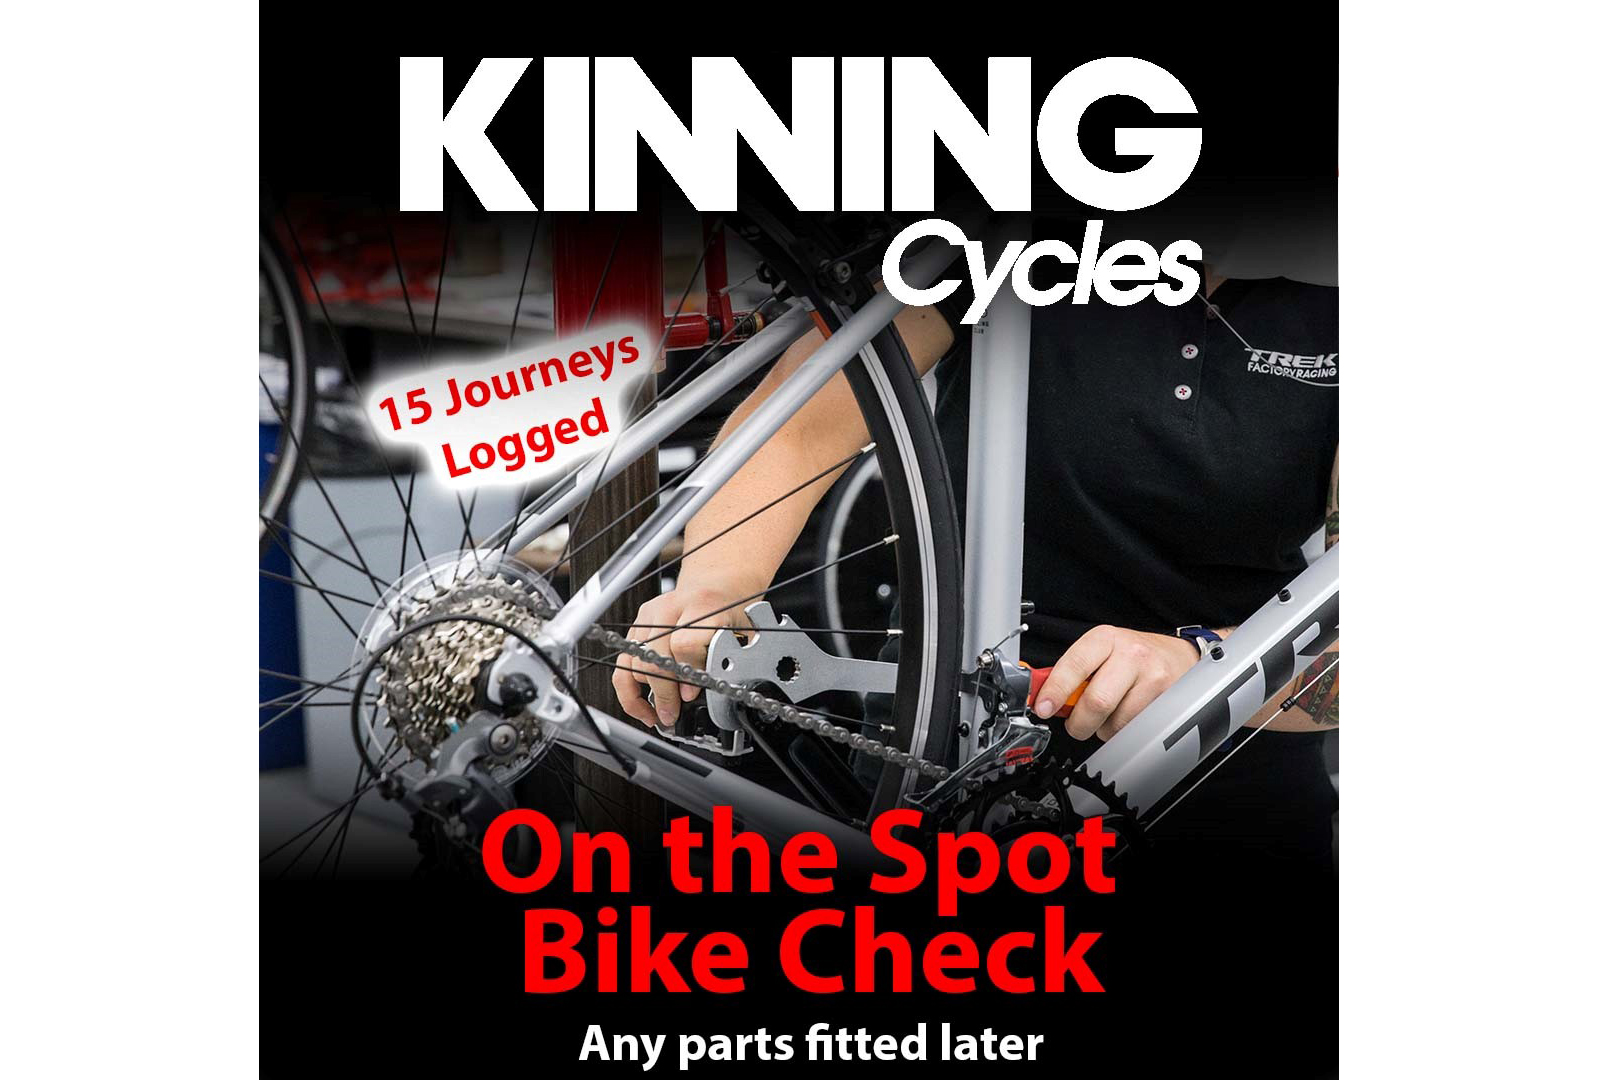 Free bike check with Kinning Cycles 